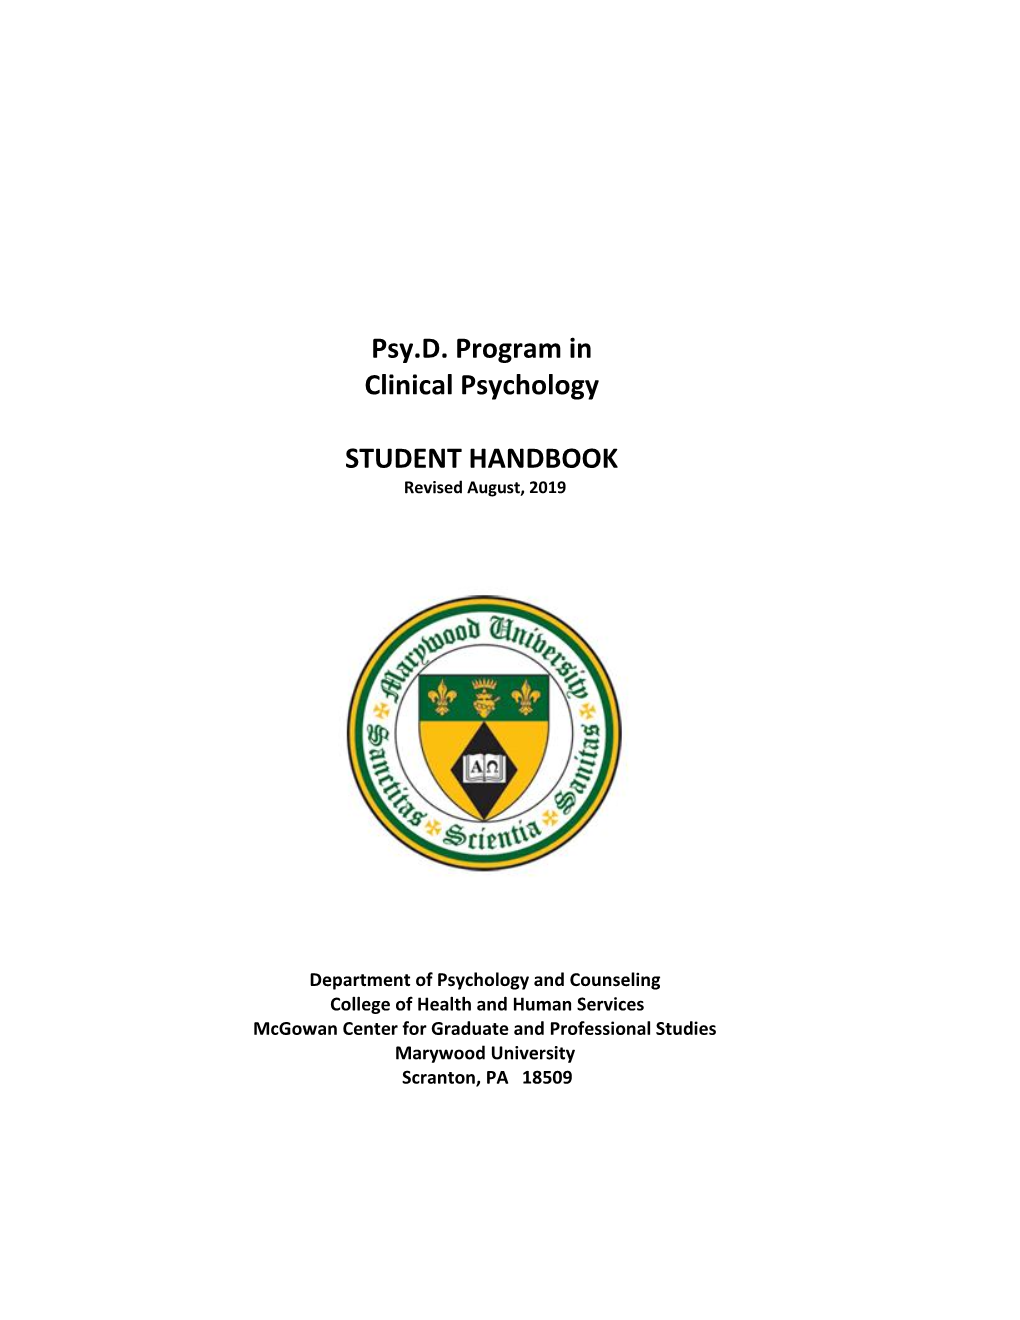 Psy.D. Program in Clinical Psychology Student Handbook